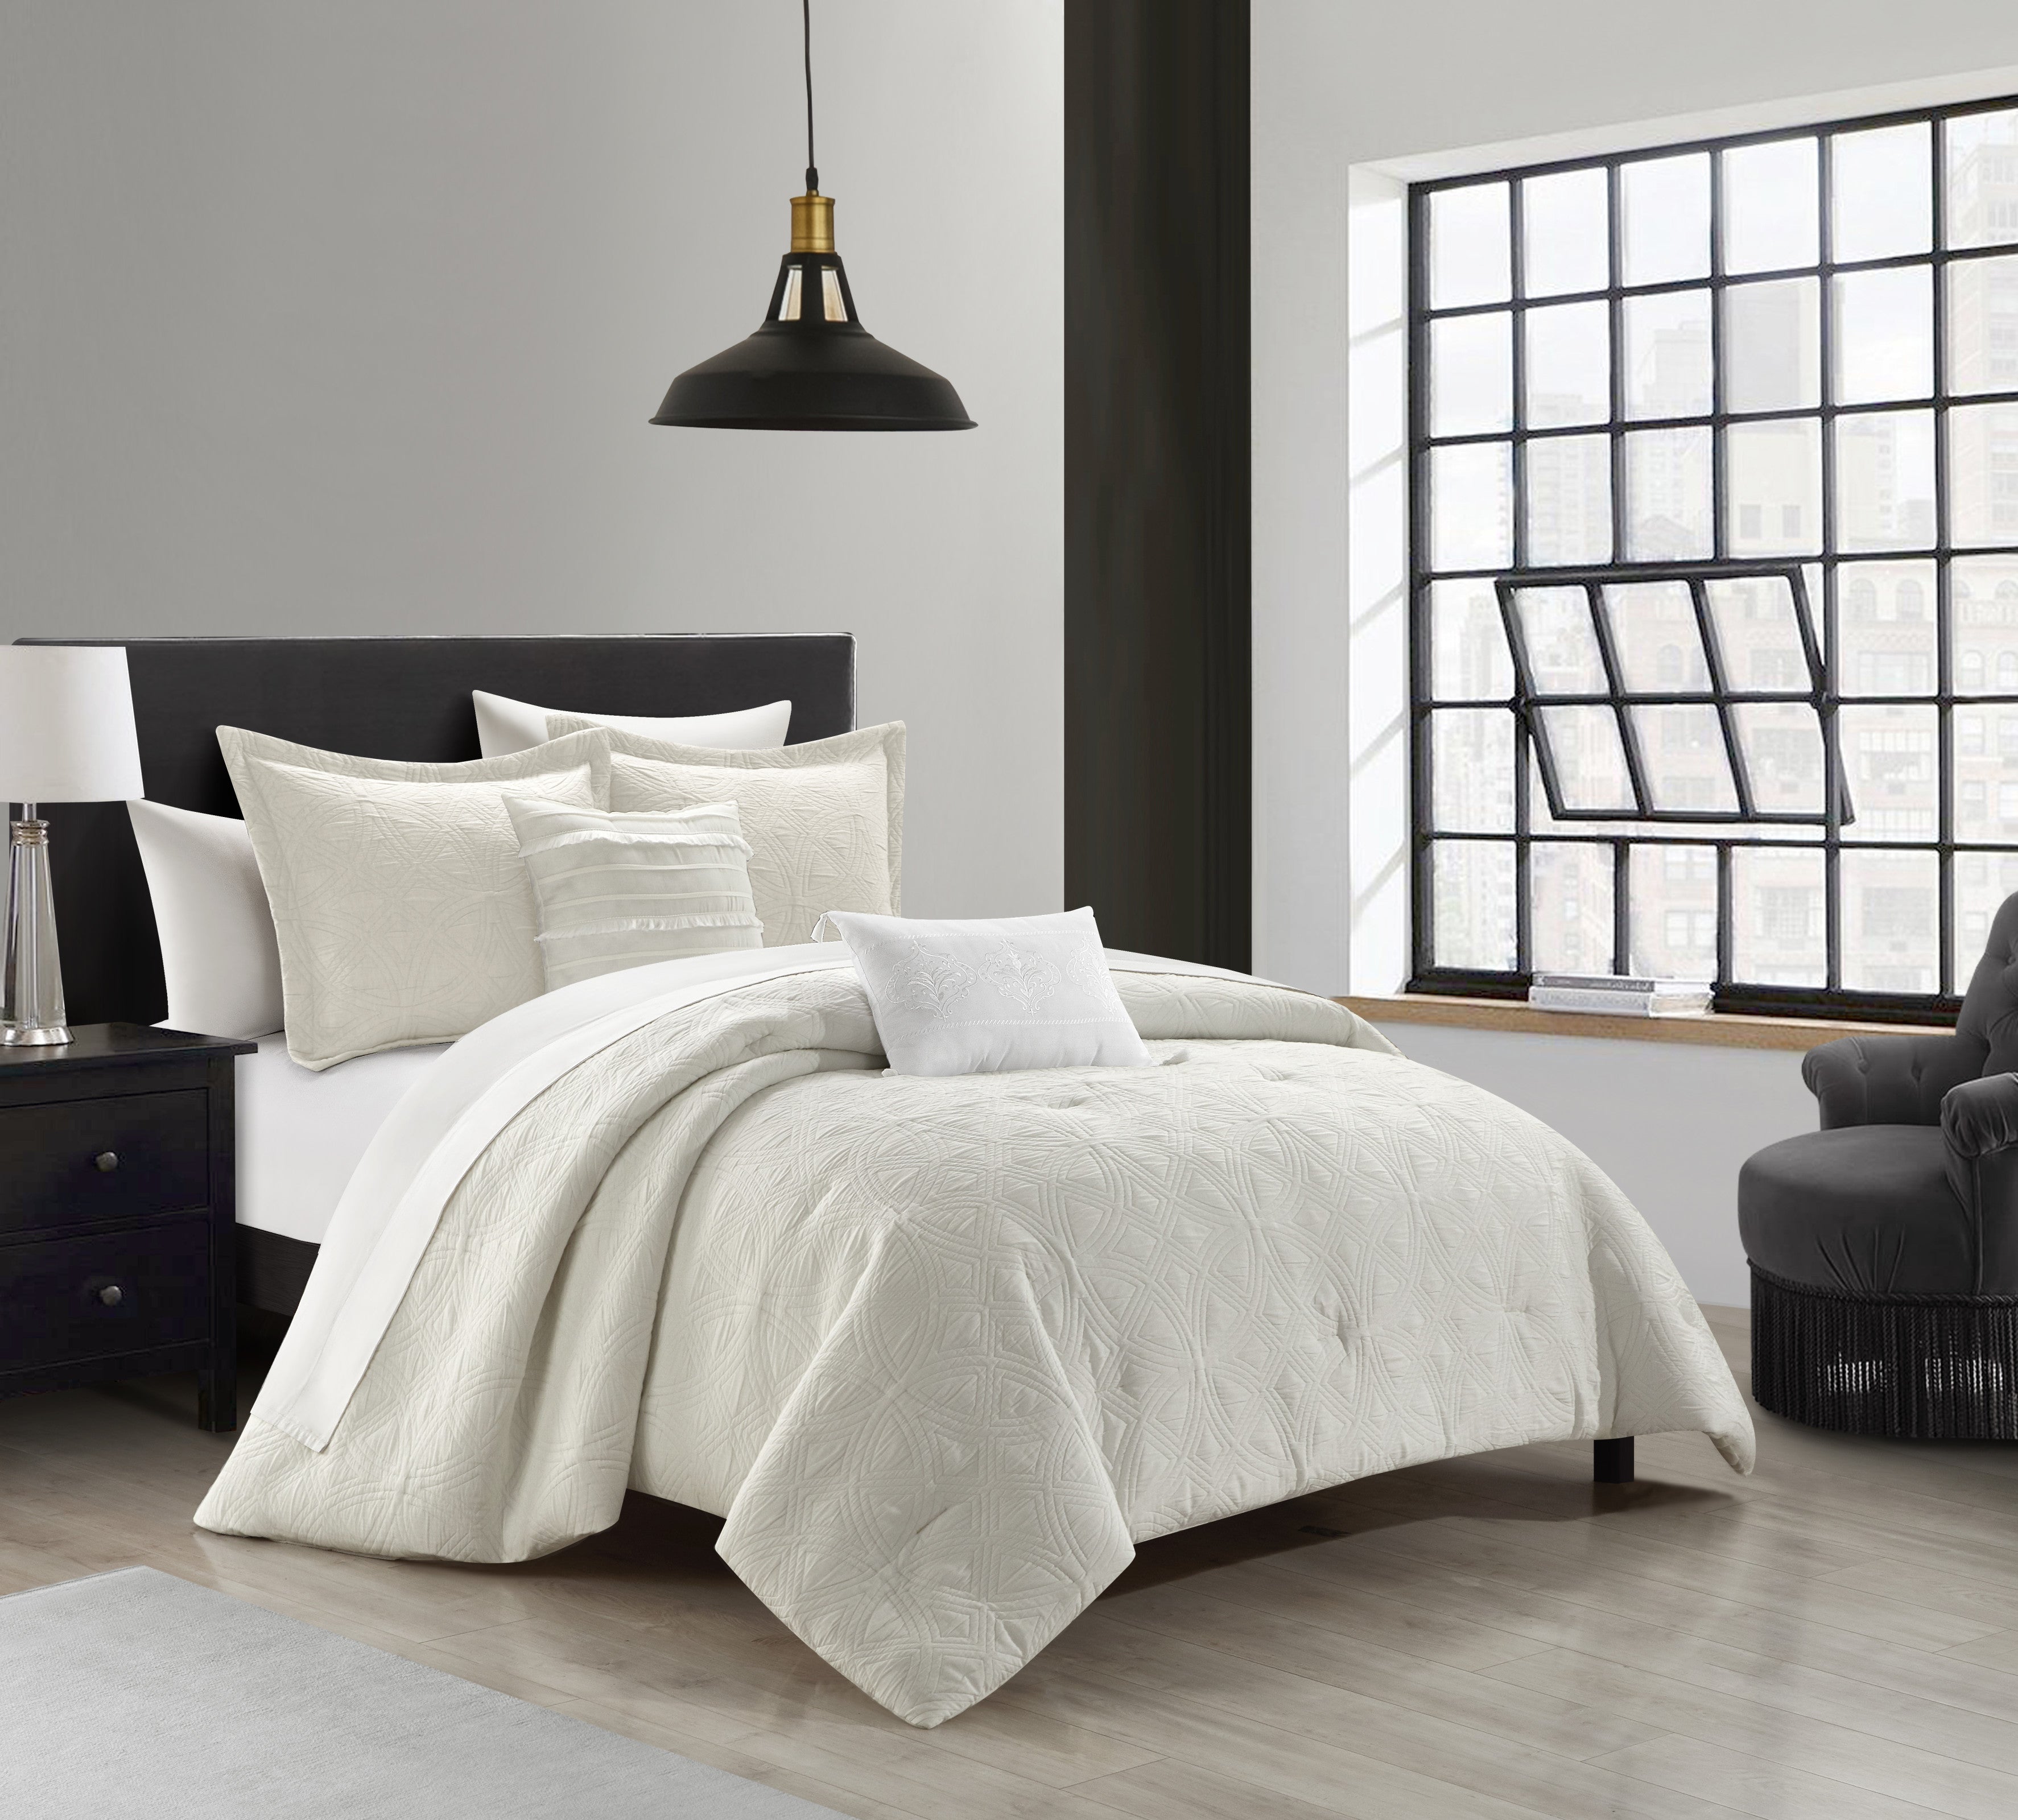 NY&C Home Artista 9 Piece Cotton Blend Jacquard Comforter Set 